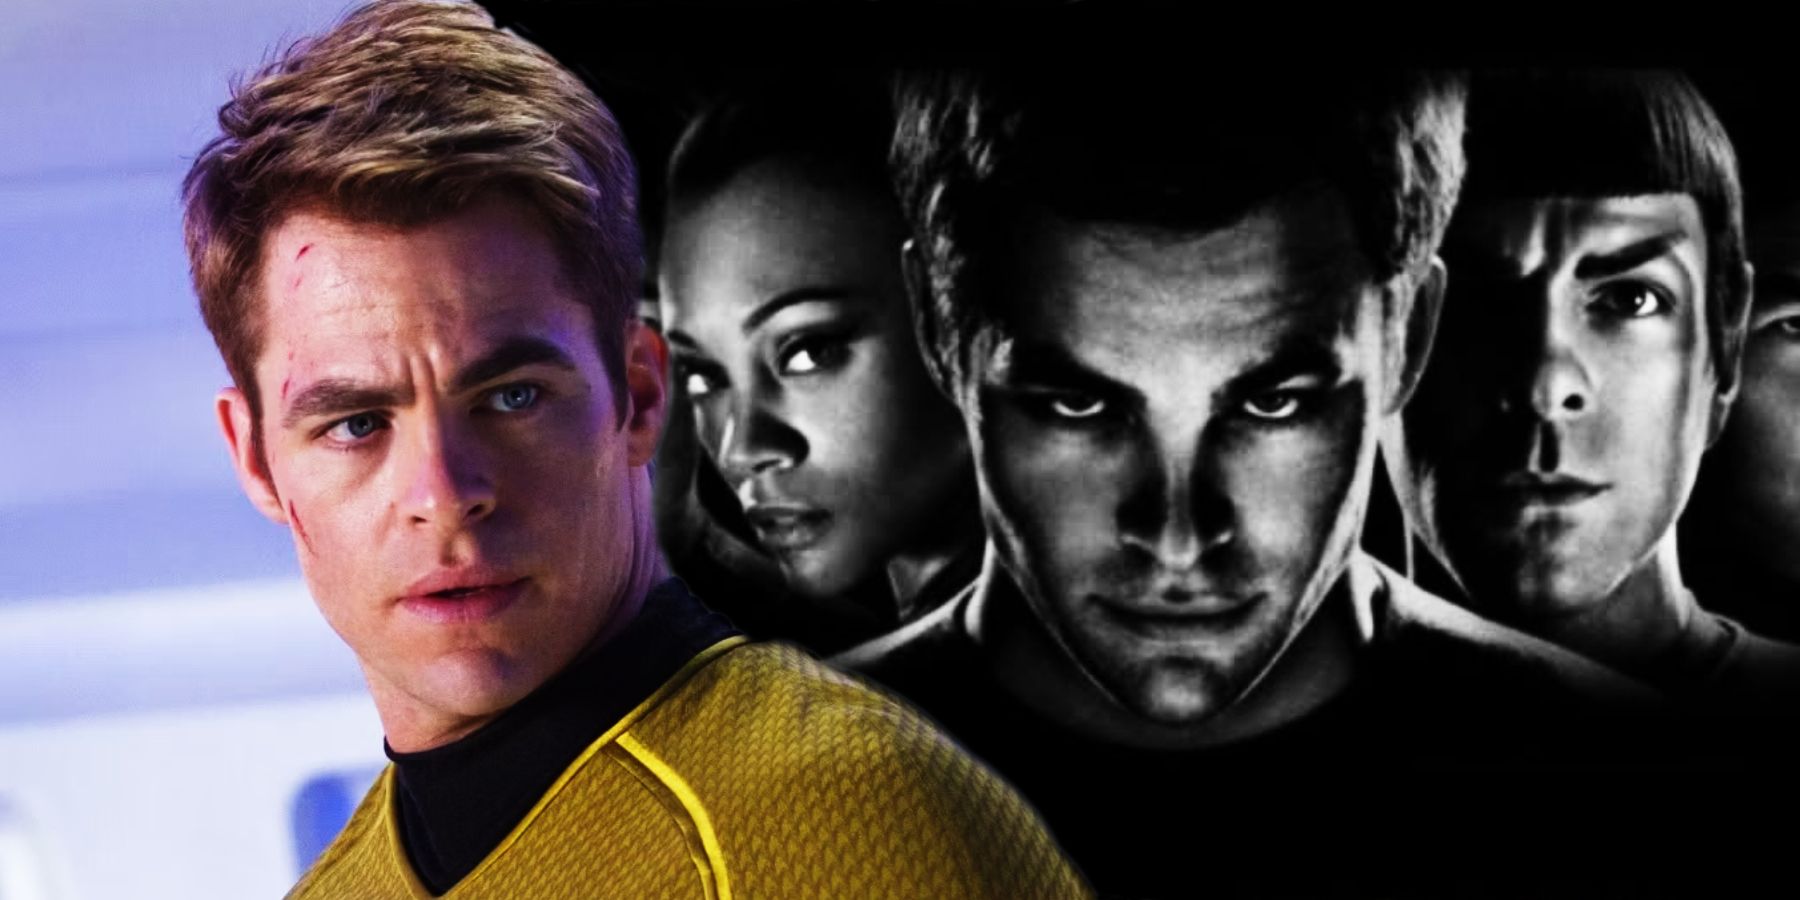 Chris Pine as Captain Kirk in the Abrams Star Trek movies